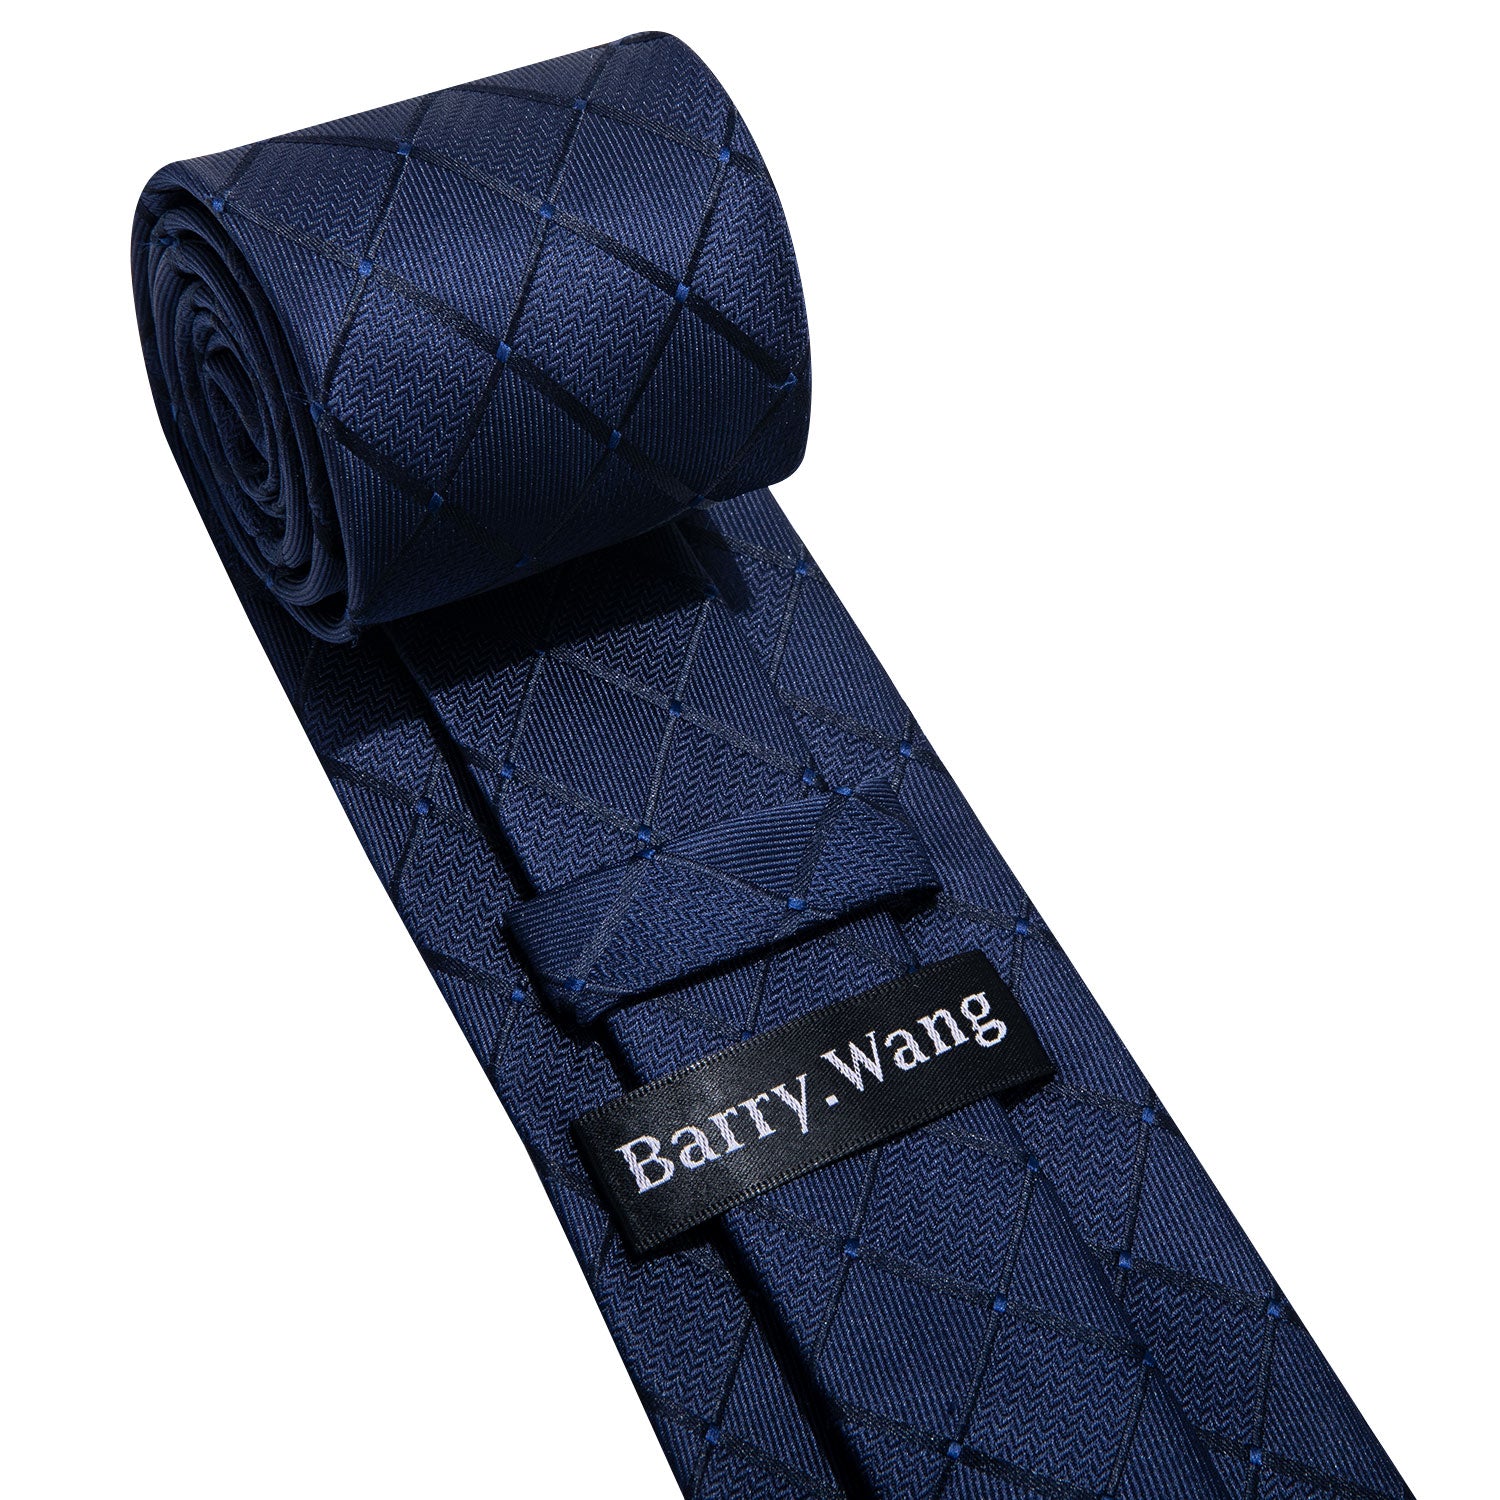 Fanstastic Blue Plaid Tie Pocket Square Cufflinks Set